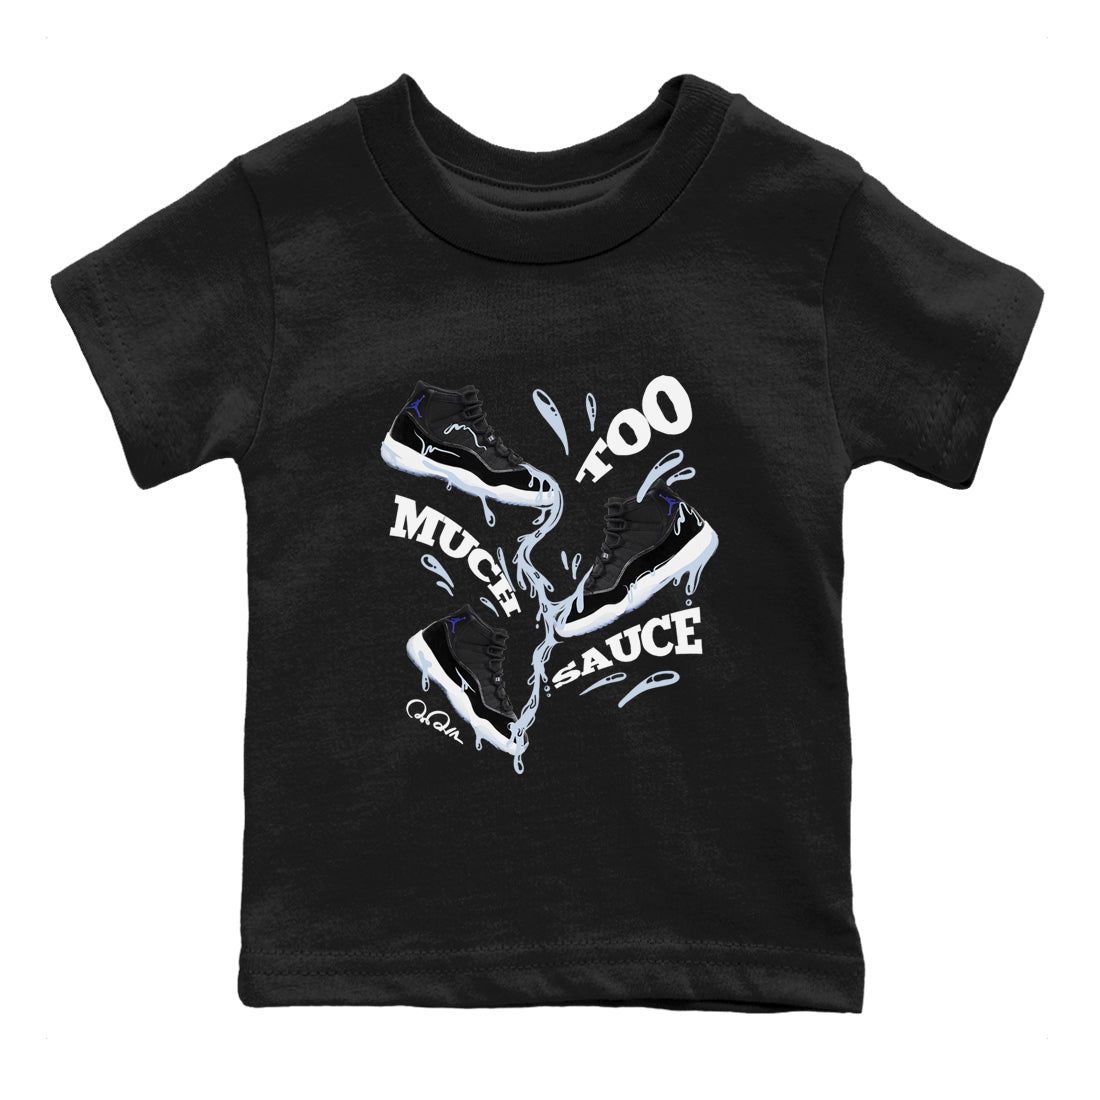 11s Space Jam shirt to match jordans Too Much Sauce sneaker tees Air Jordan 11 Space Jam SNRT Sneaker Release Tees Baby Toddler Black 2 T-Shirt